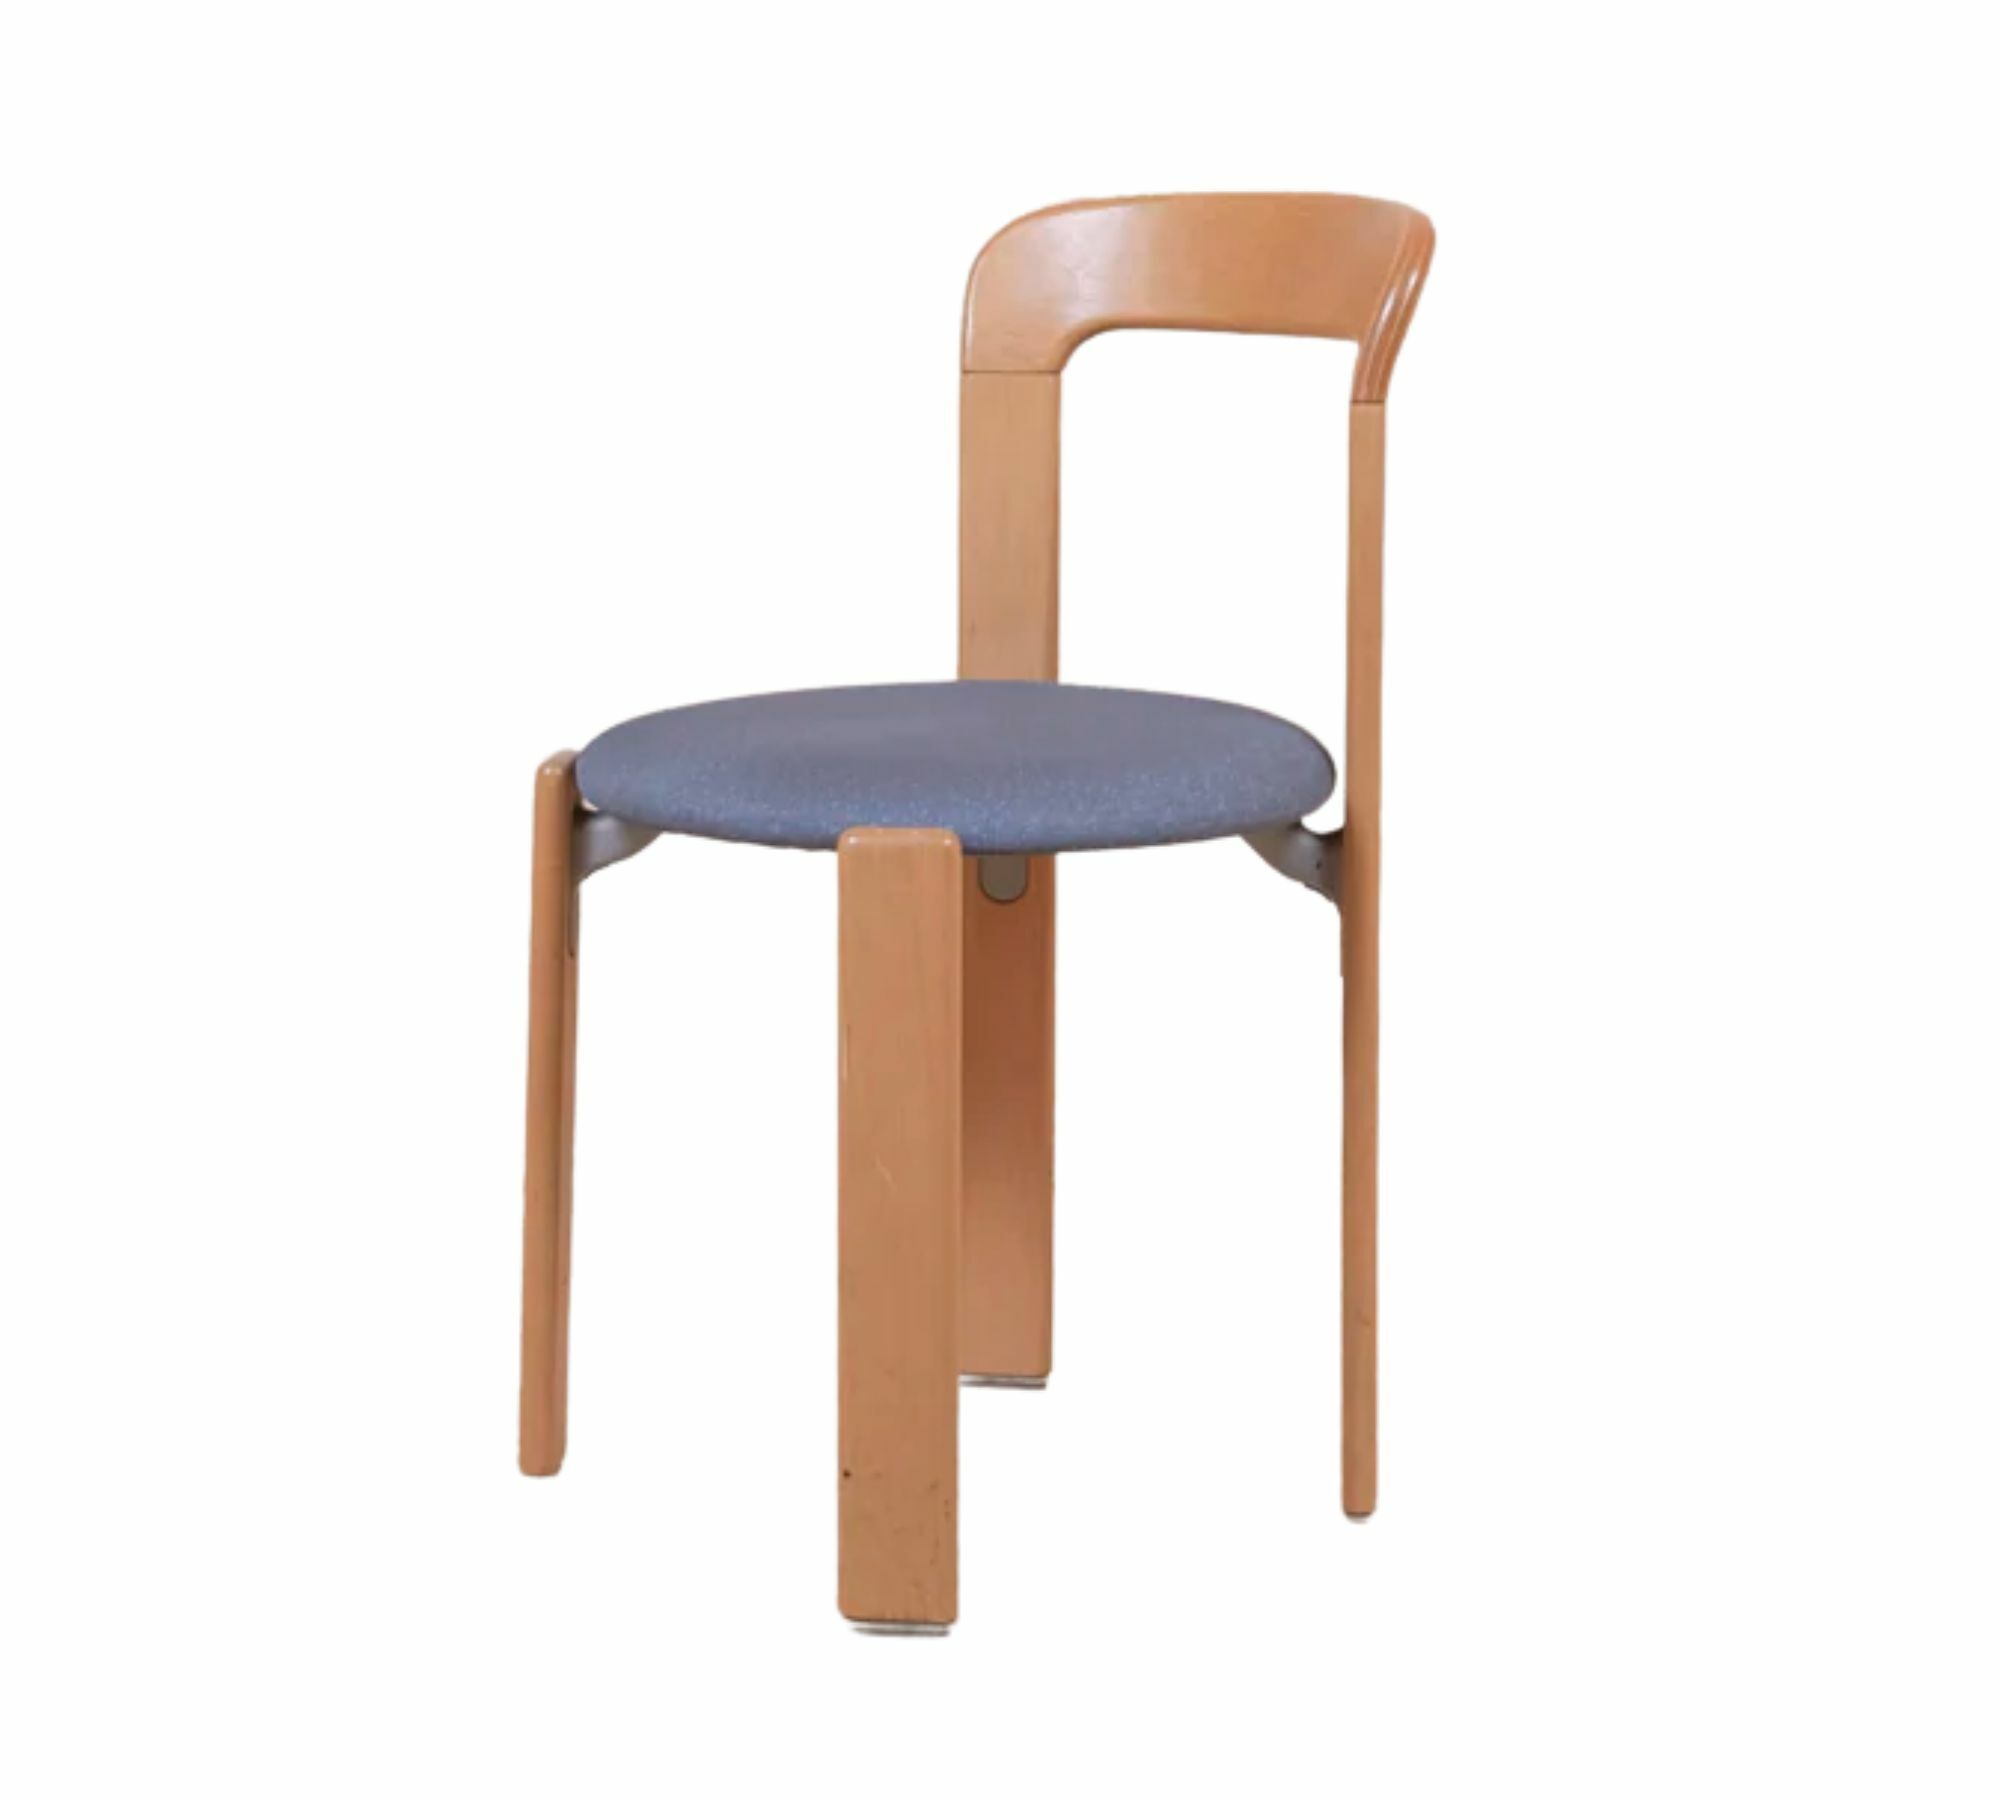 Rey Chair Holz Braun 0